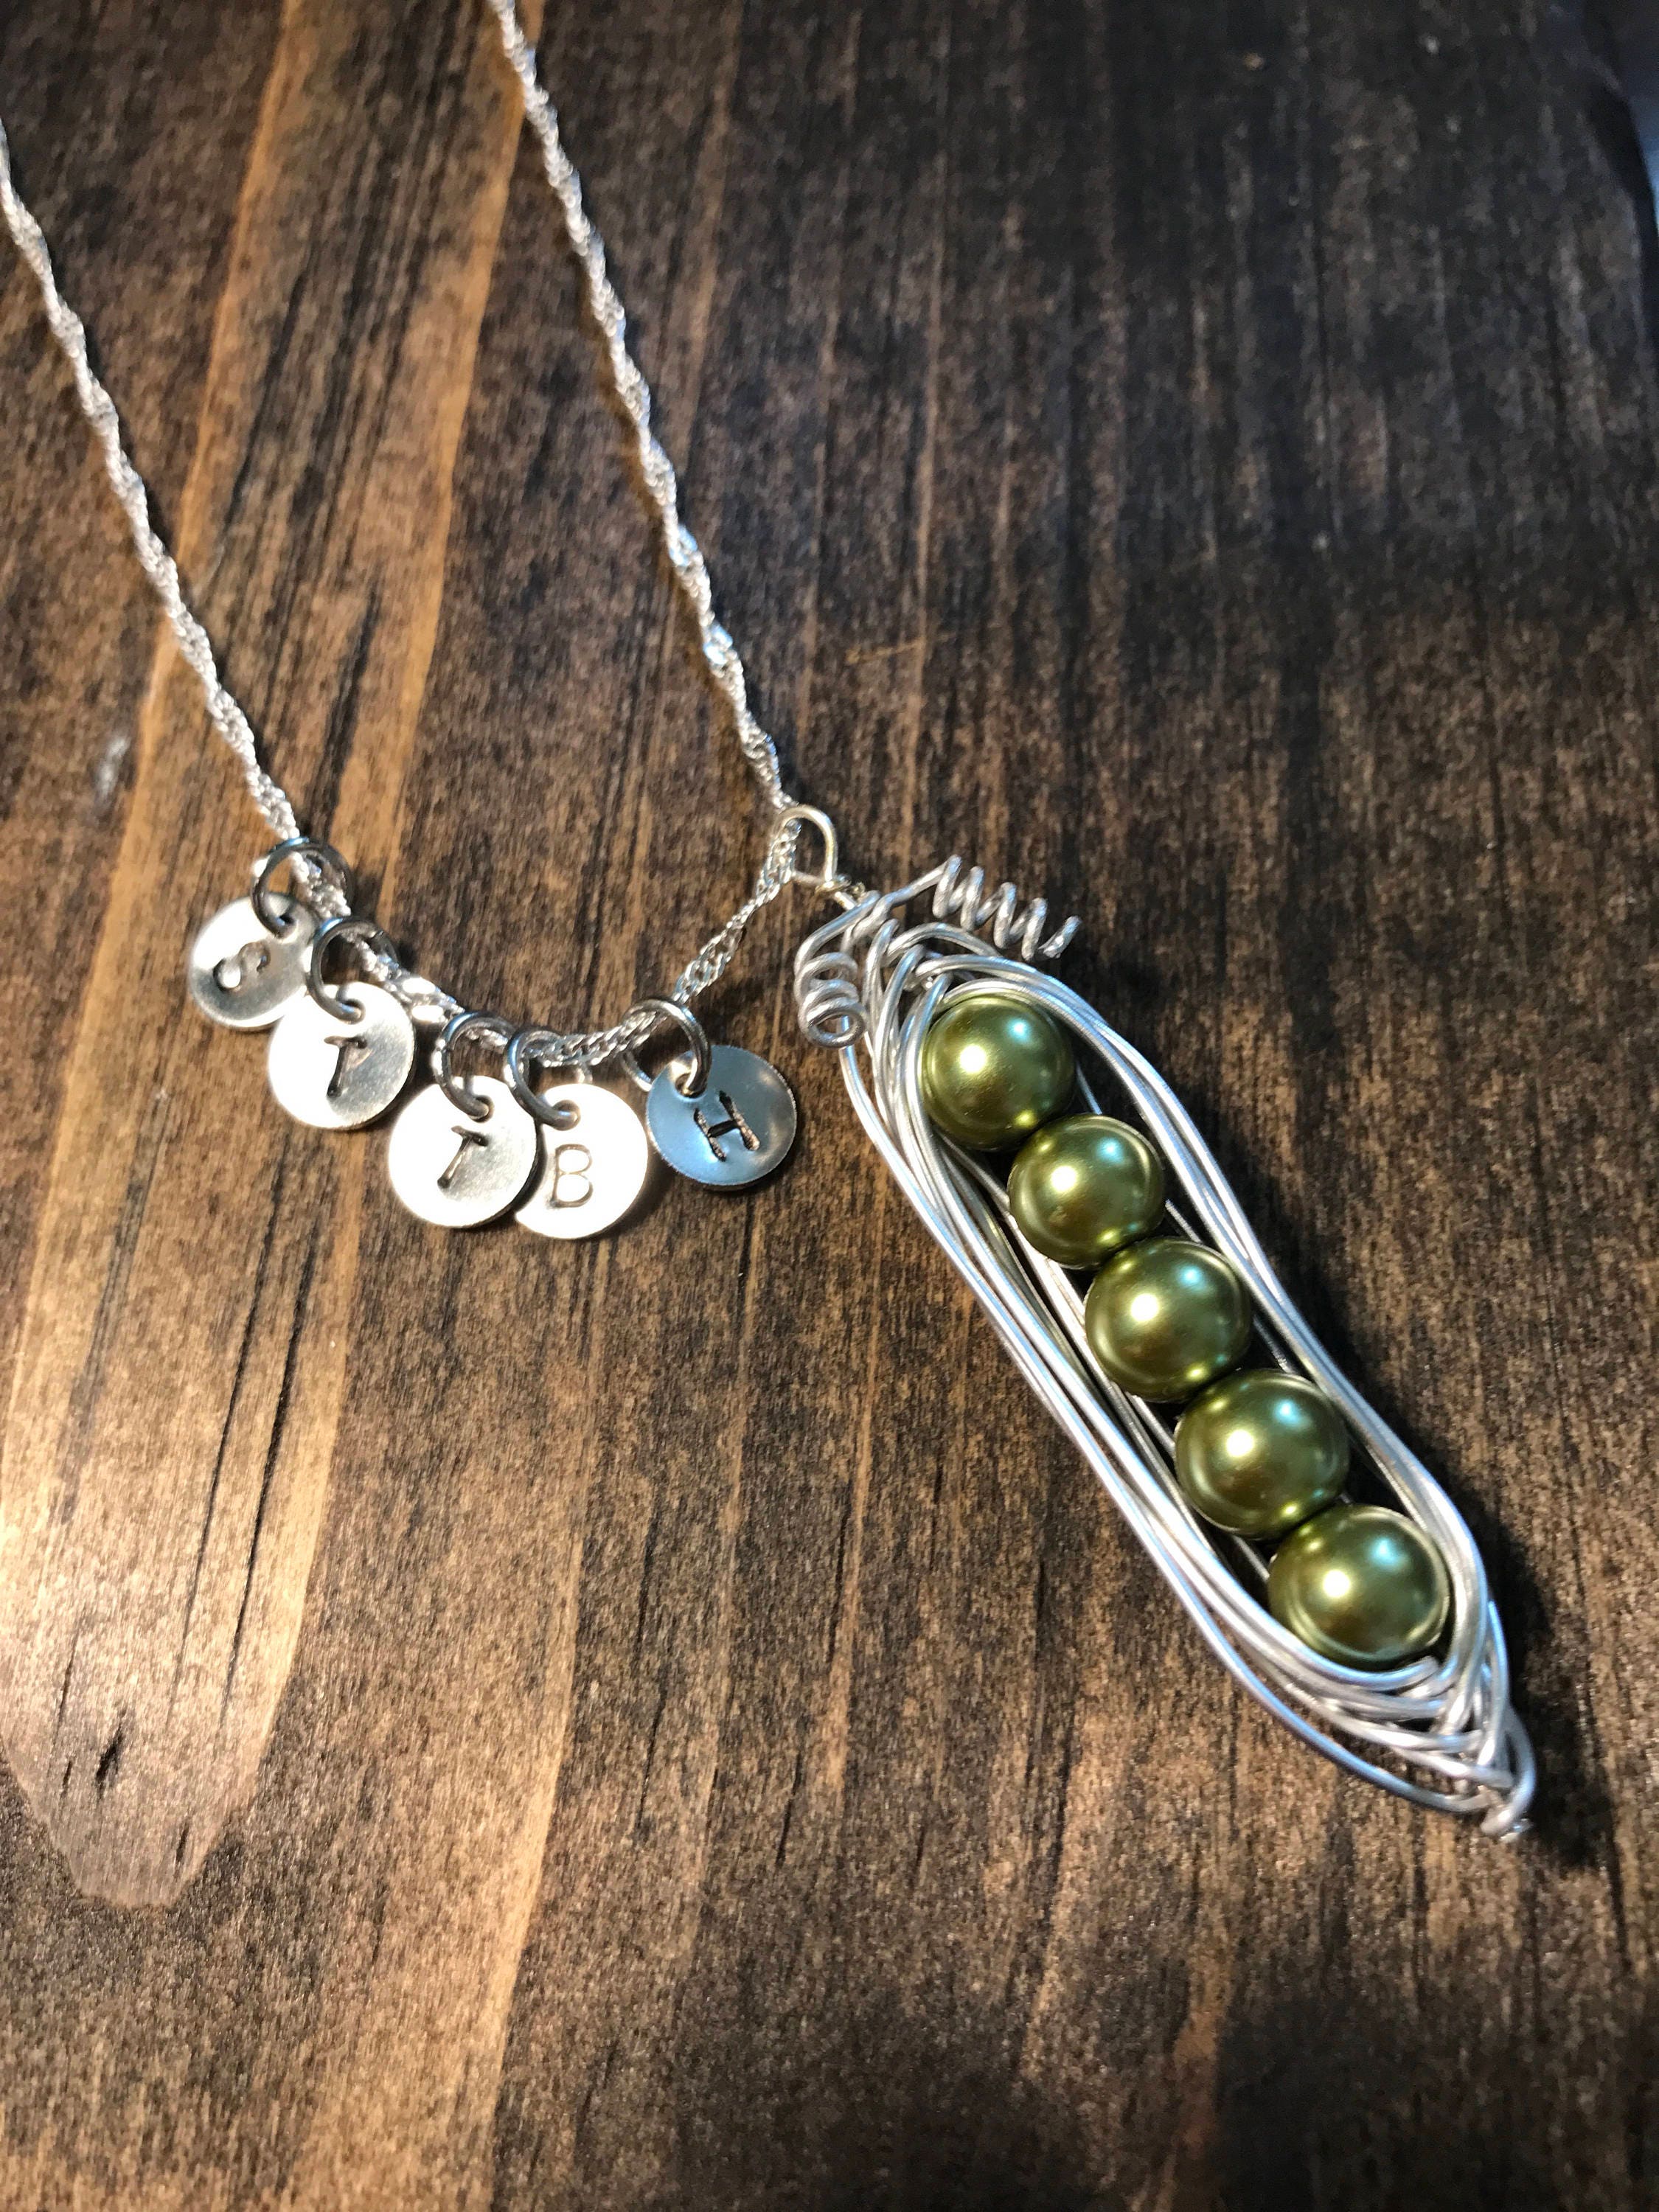 PEAS IN A POD necklace with Custom Colors - Swarovski Elements glass  pearls) - Mu-Yin Jewelry